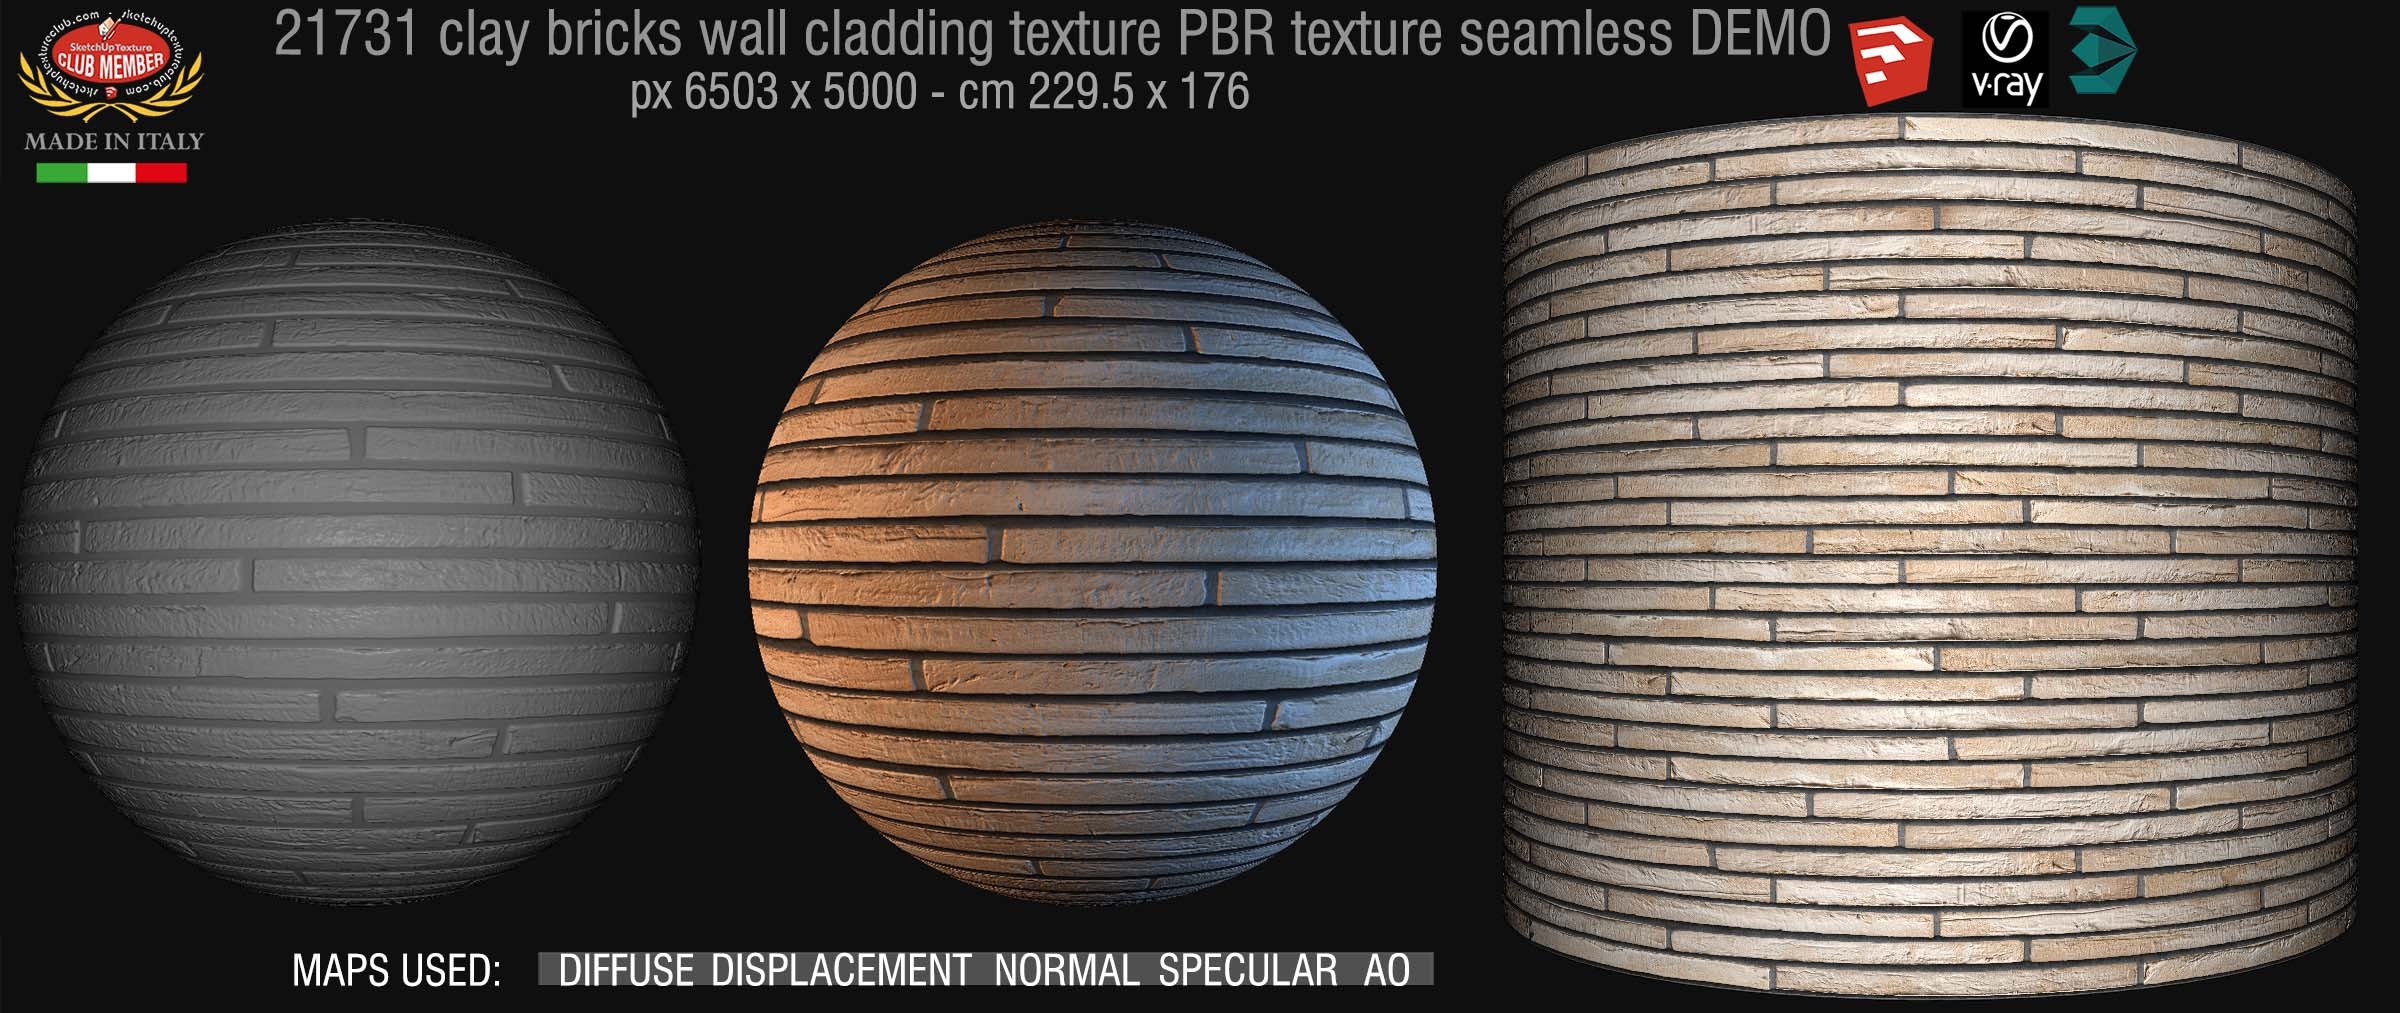 21731 Clay bricks wall cladding PBR texture seamless DEMO